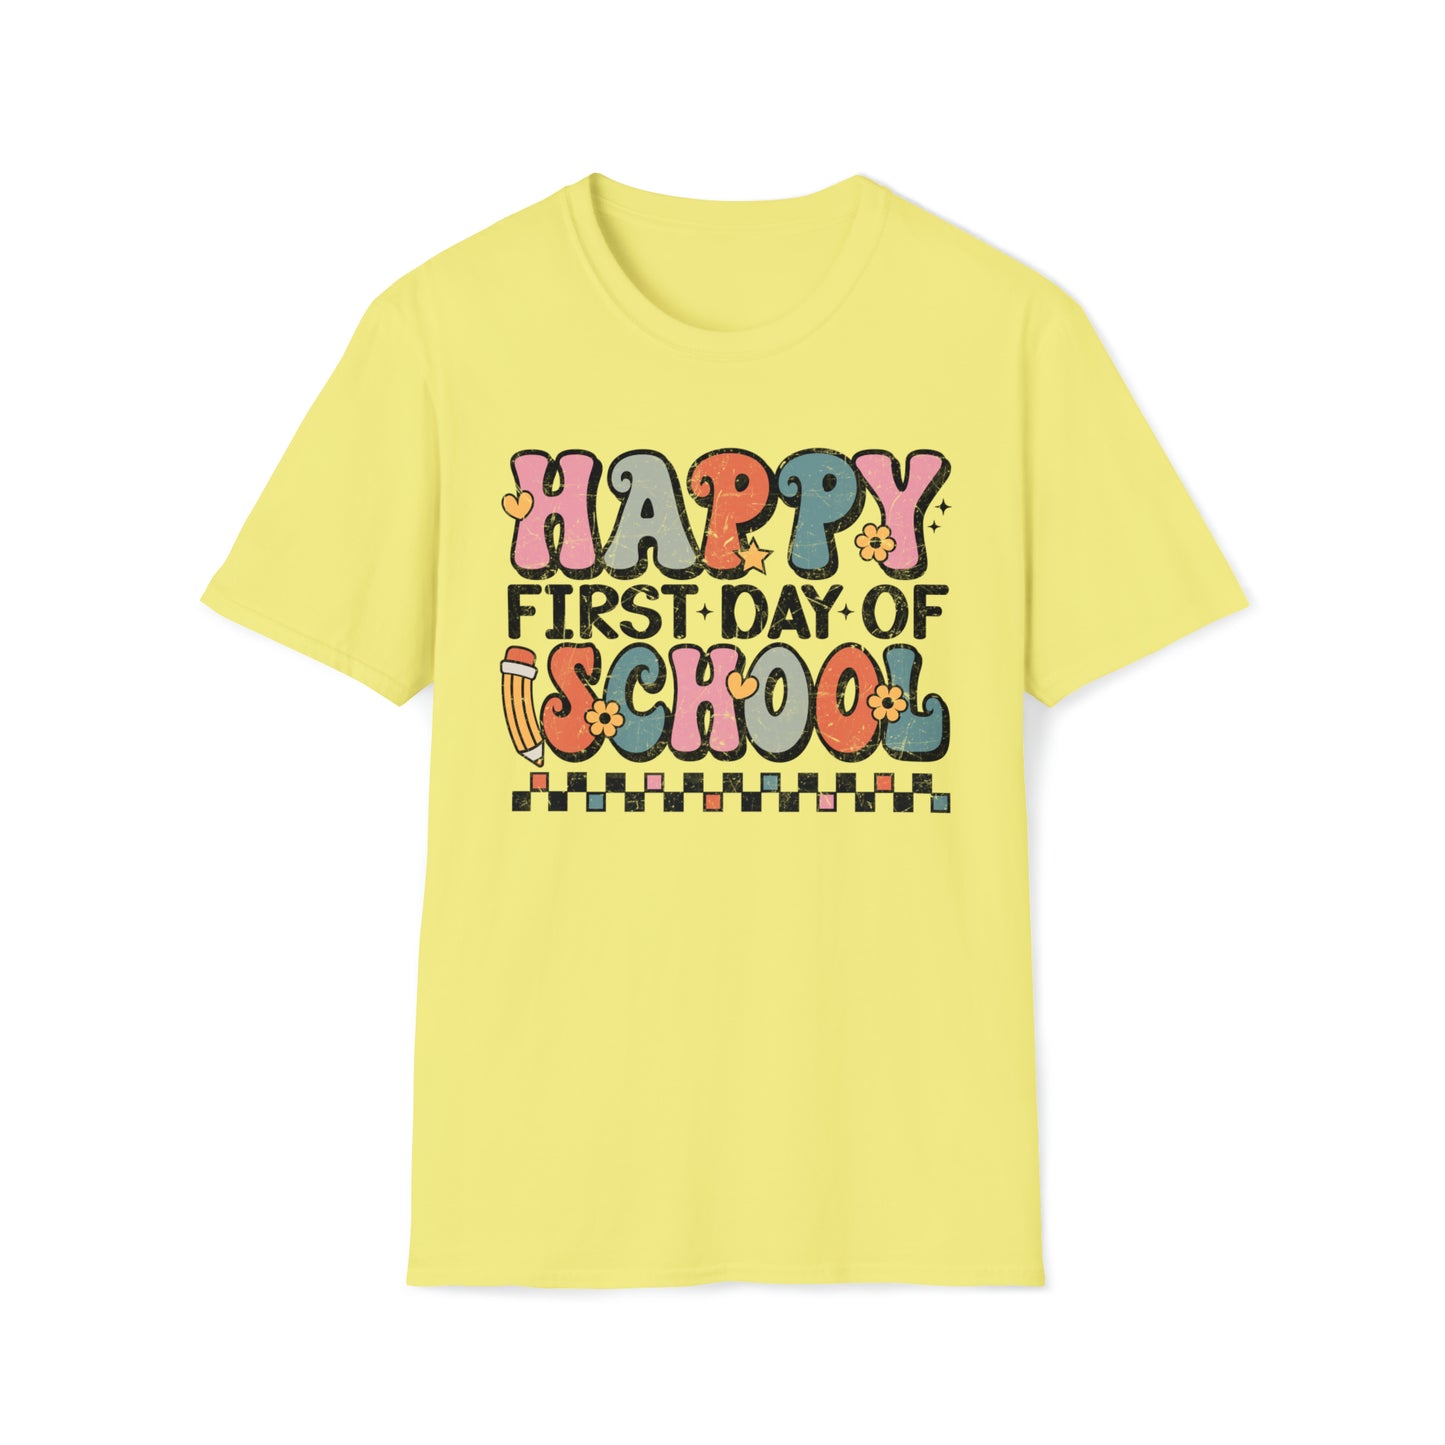 Retro Happy 1st Day of School Shirt